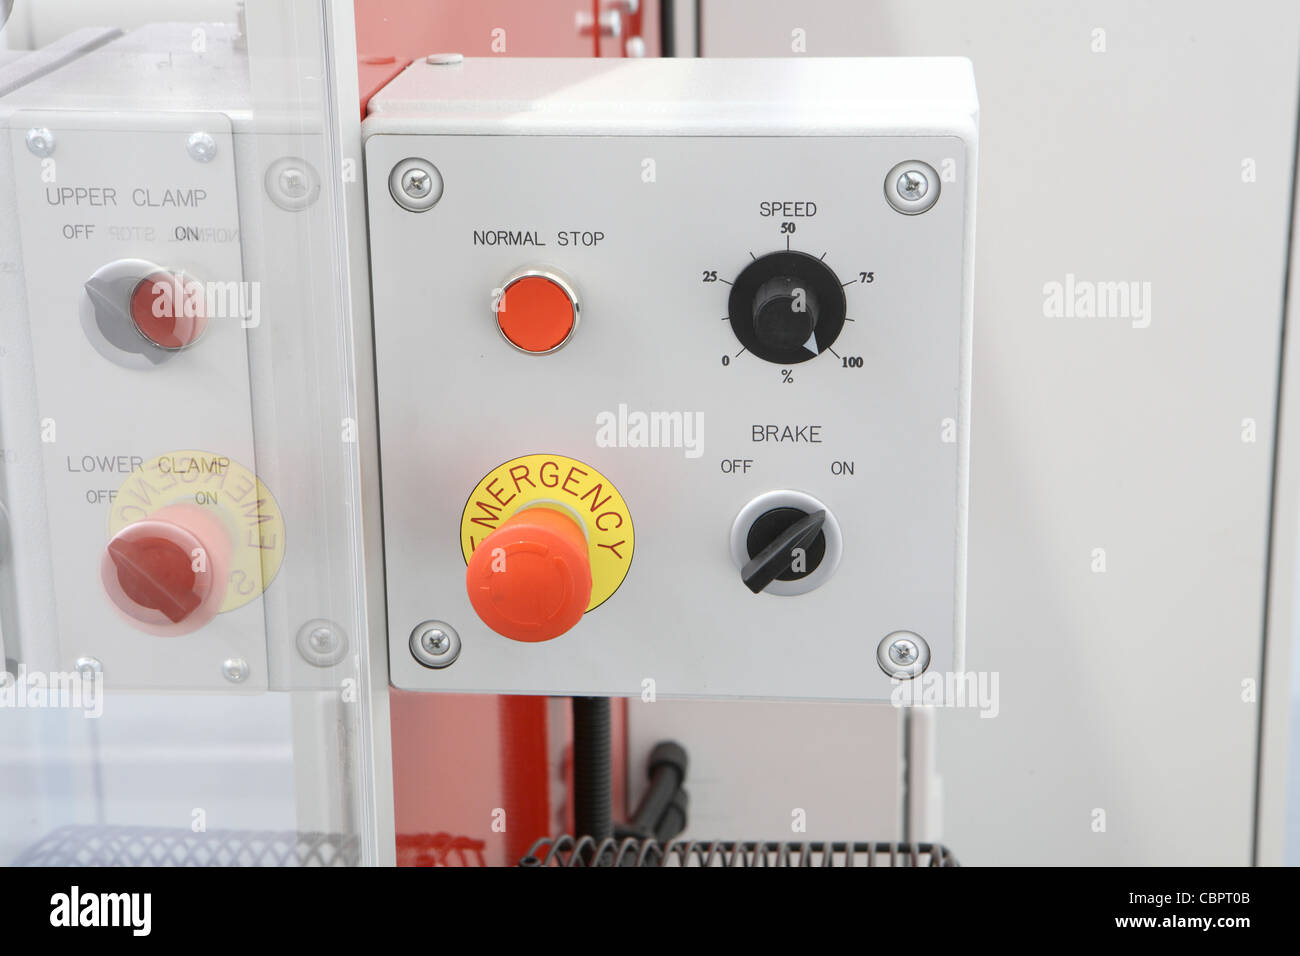 Machine control panel Stock Photo